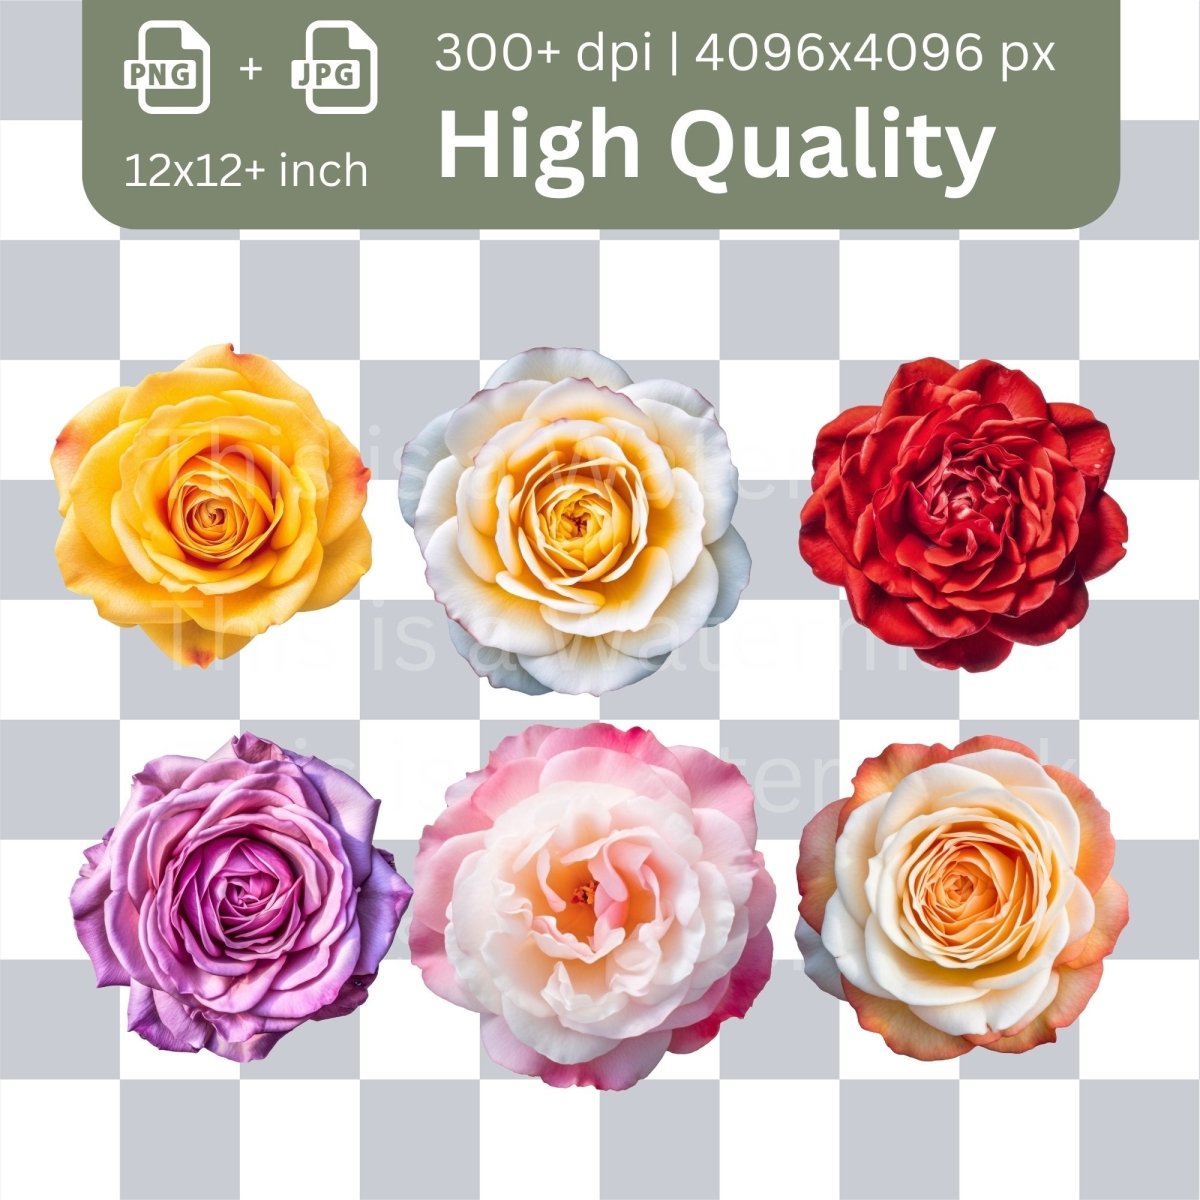 Roses Megabundle 240+240 High Quality PNGs Floral Clipart Wedding Invitation Art Card Making Clip Art Digital Paper Craft Flower Graphics - Everything Pixel